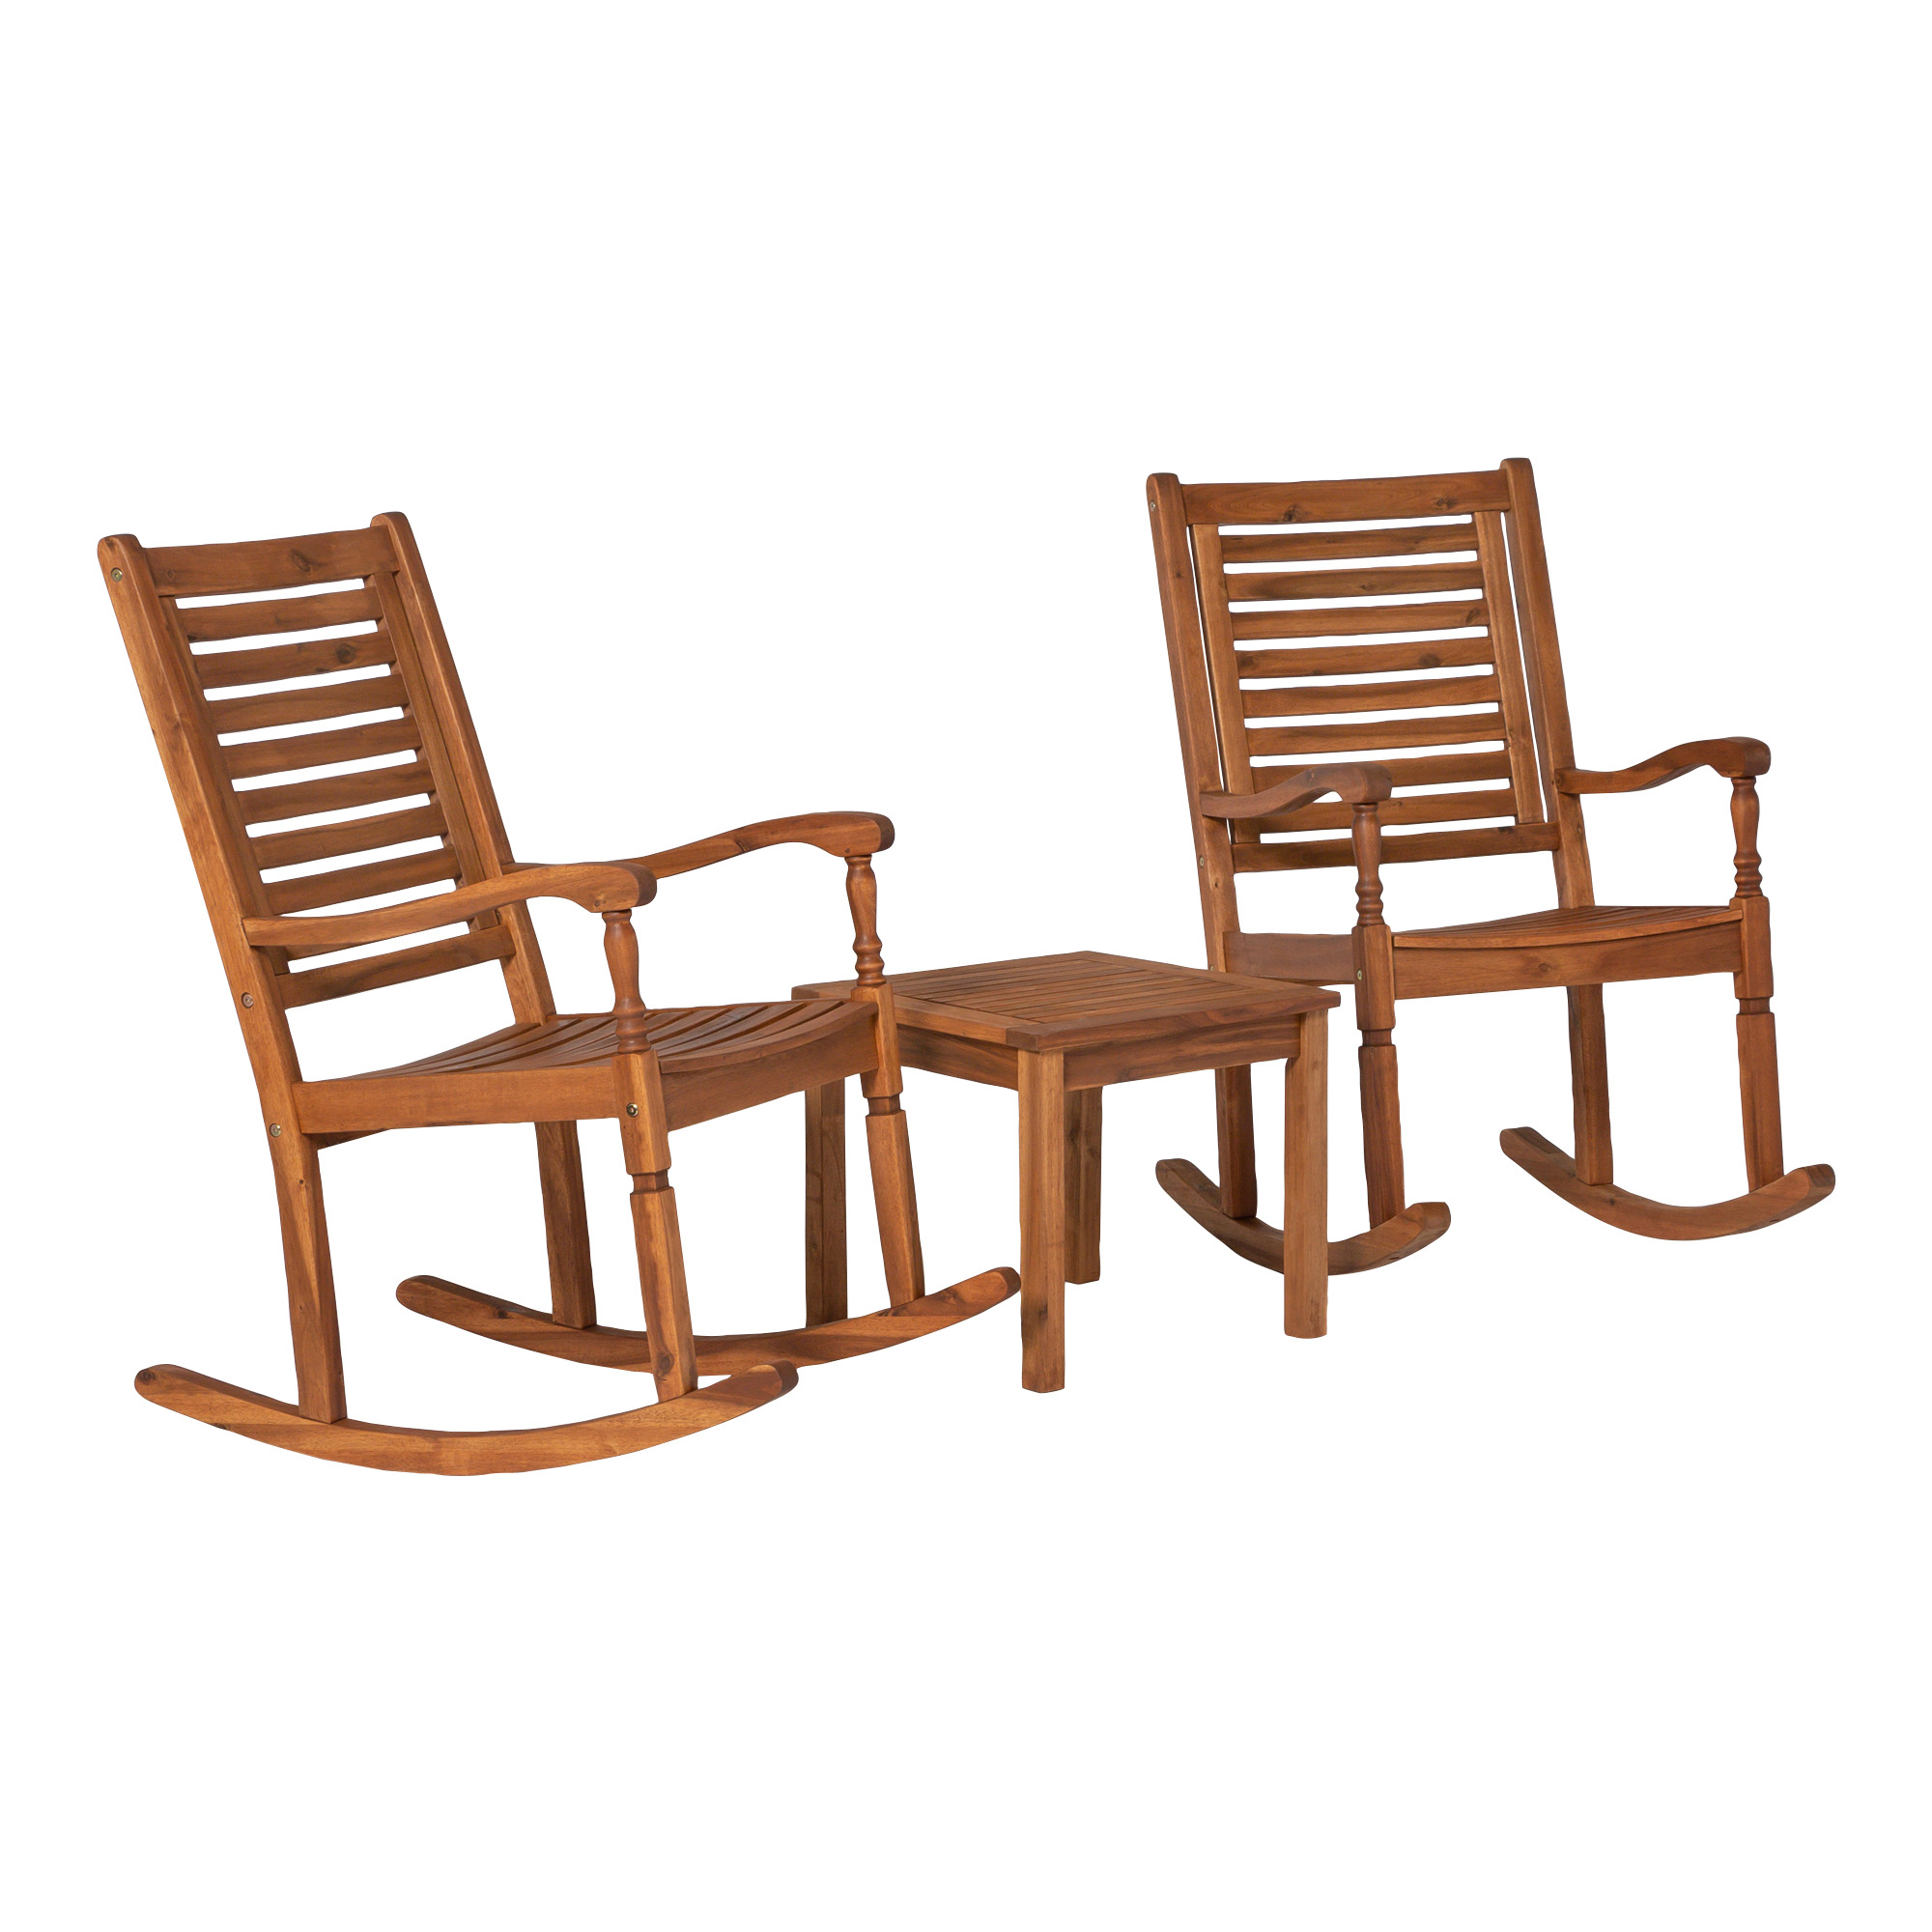 Walker Edison Portofino 3 Piece Slat Back Patio Set, Brown Brown 3 Piece Set Chair - image 2 of 2